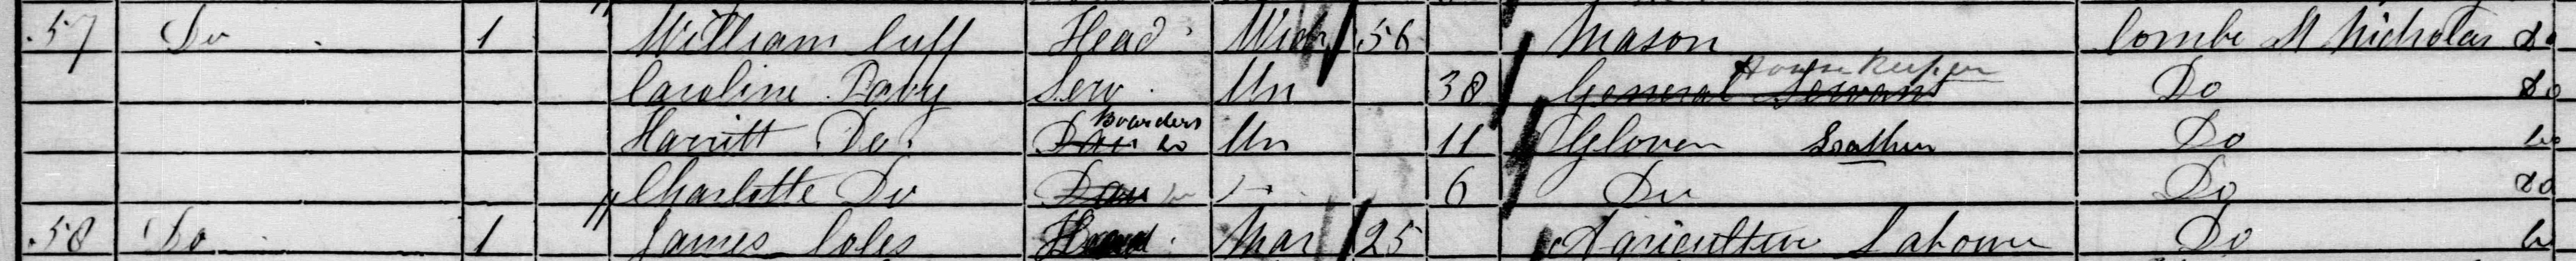 William Cuff & Caroline Pavey in the Somerset 1861 Census